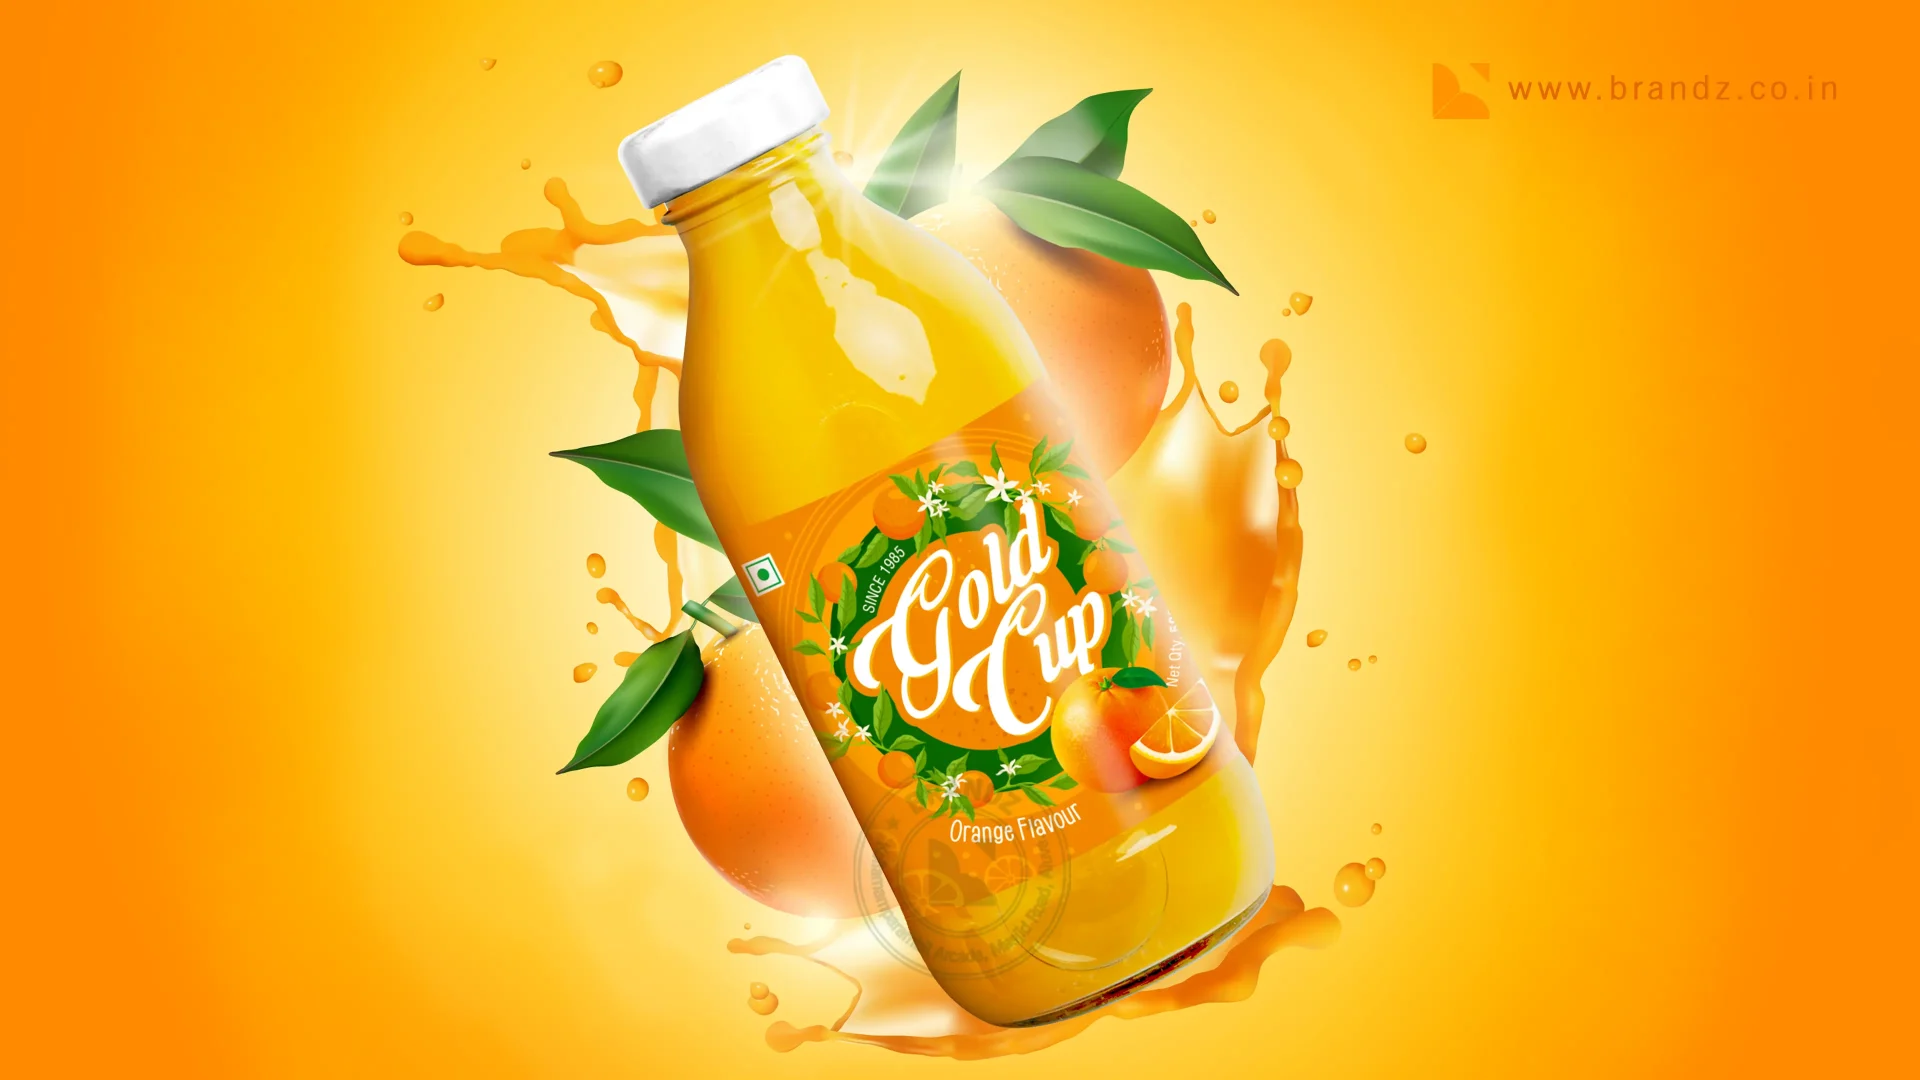 Gold Cup Orange Flavour Cool Drink Label